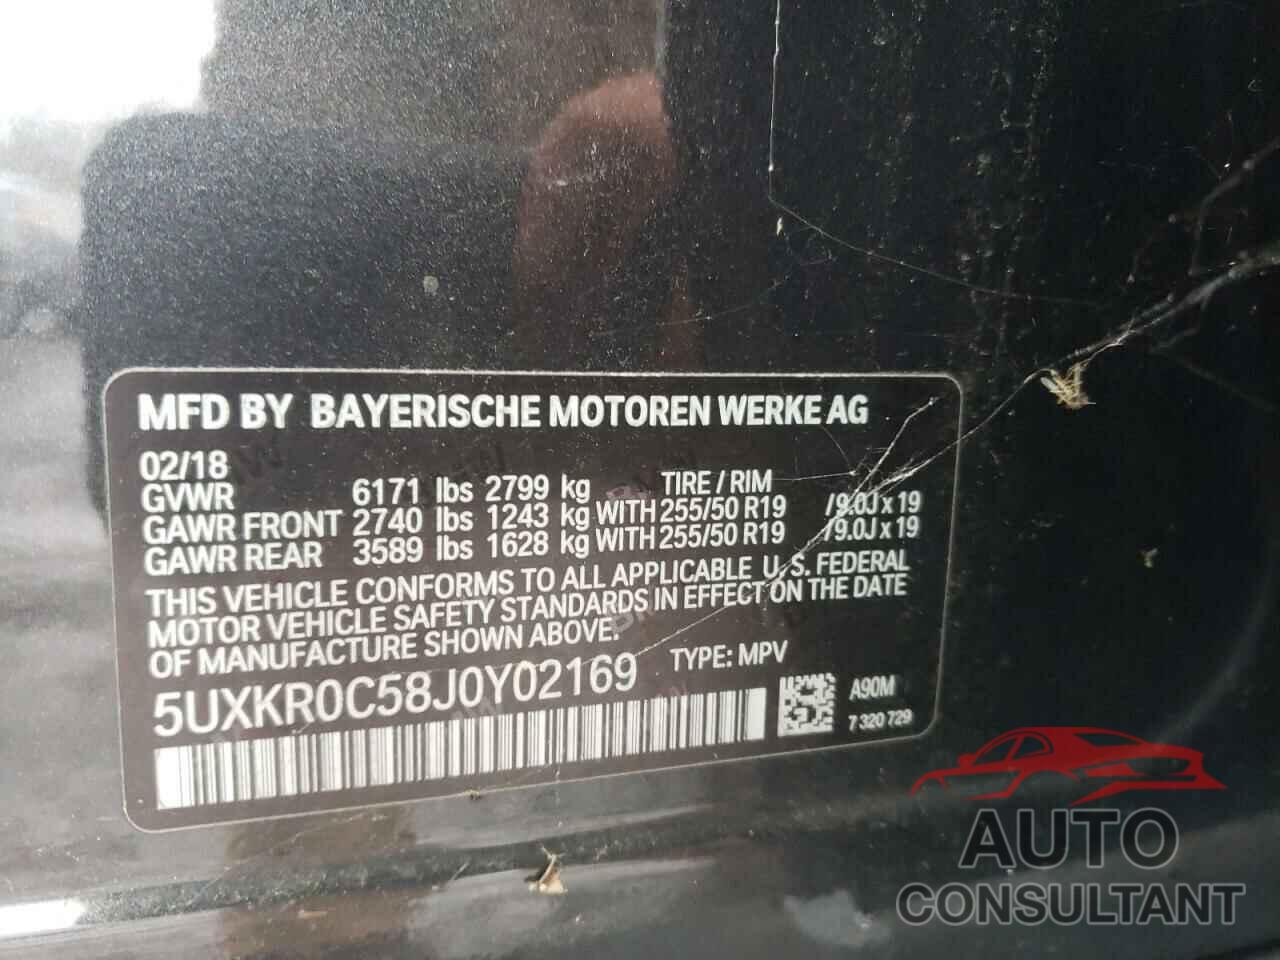 BMW X5 2018 - 5UXKR0C58J0Y02169